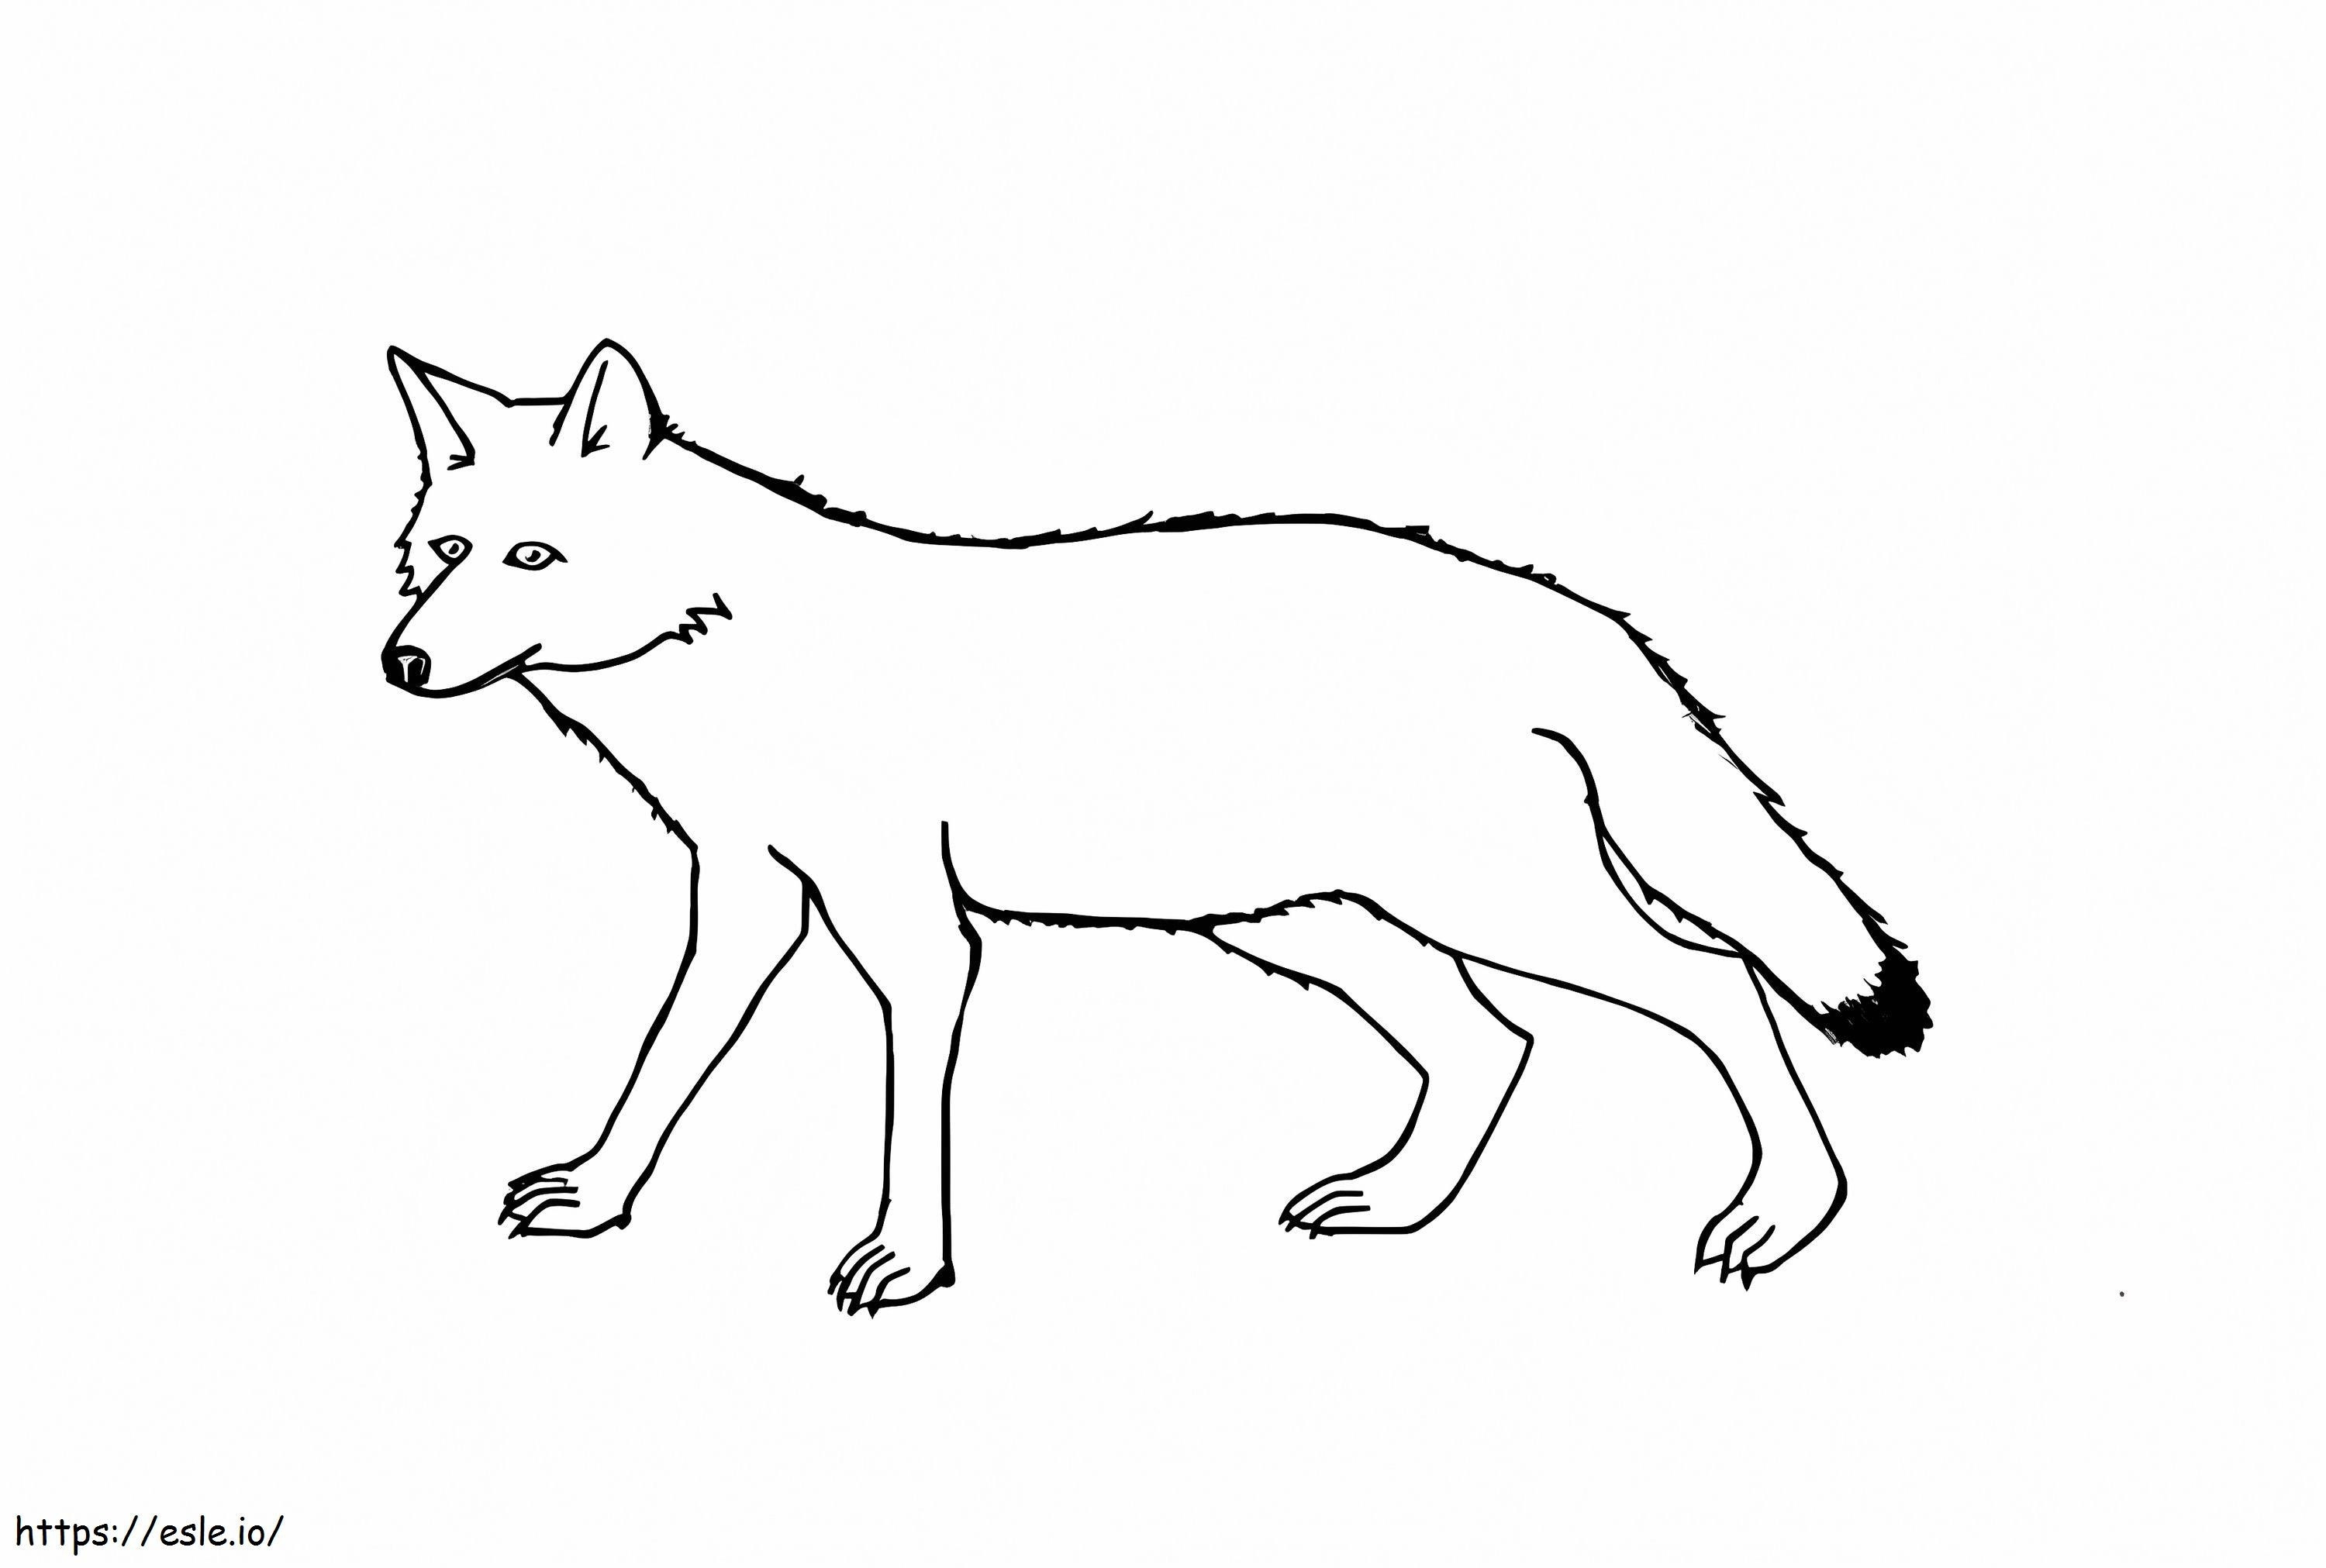 Coloriage Coyote 5 à imprimer dessin